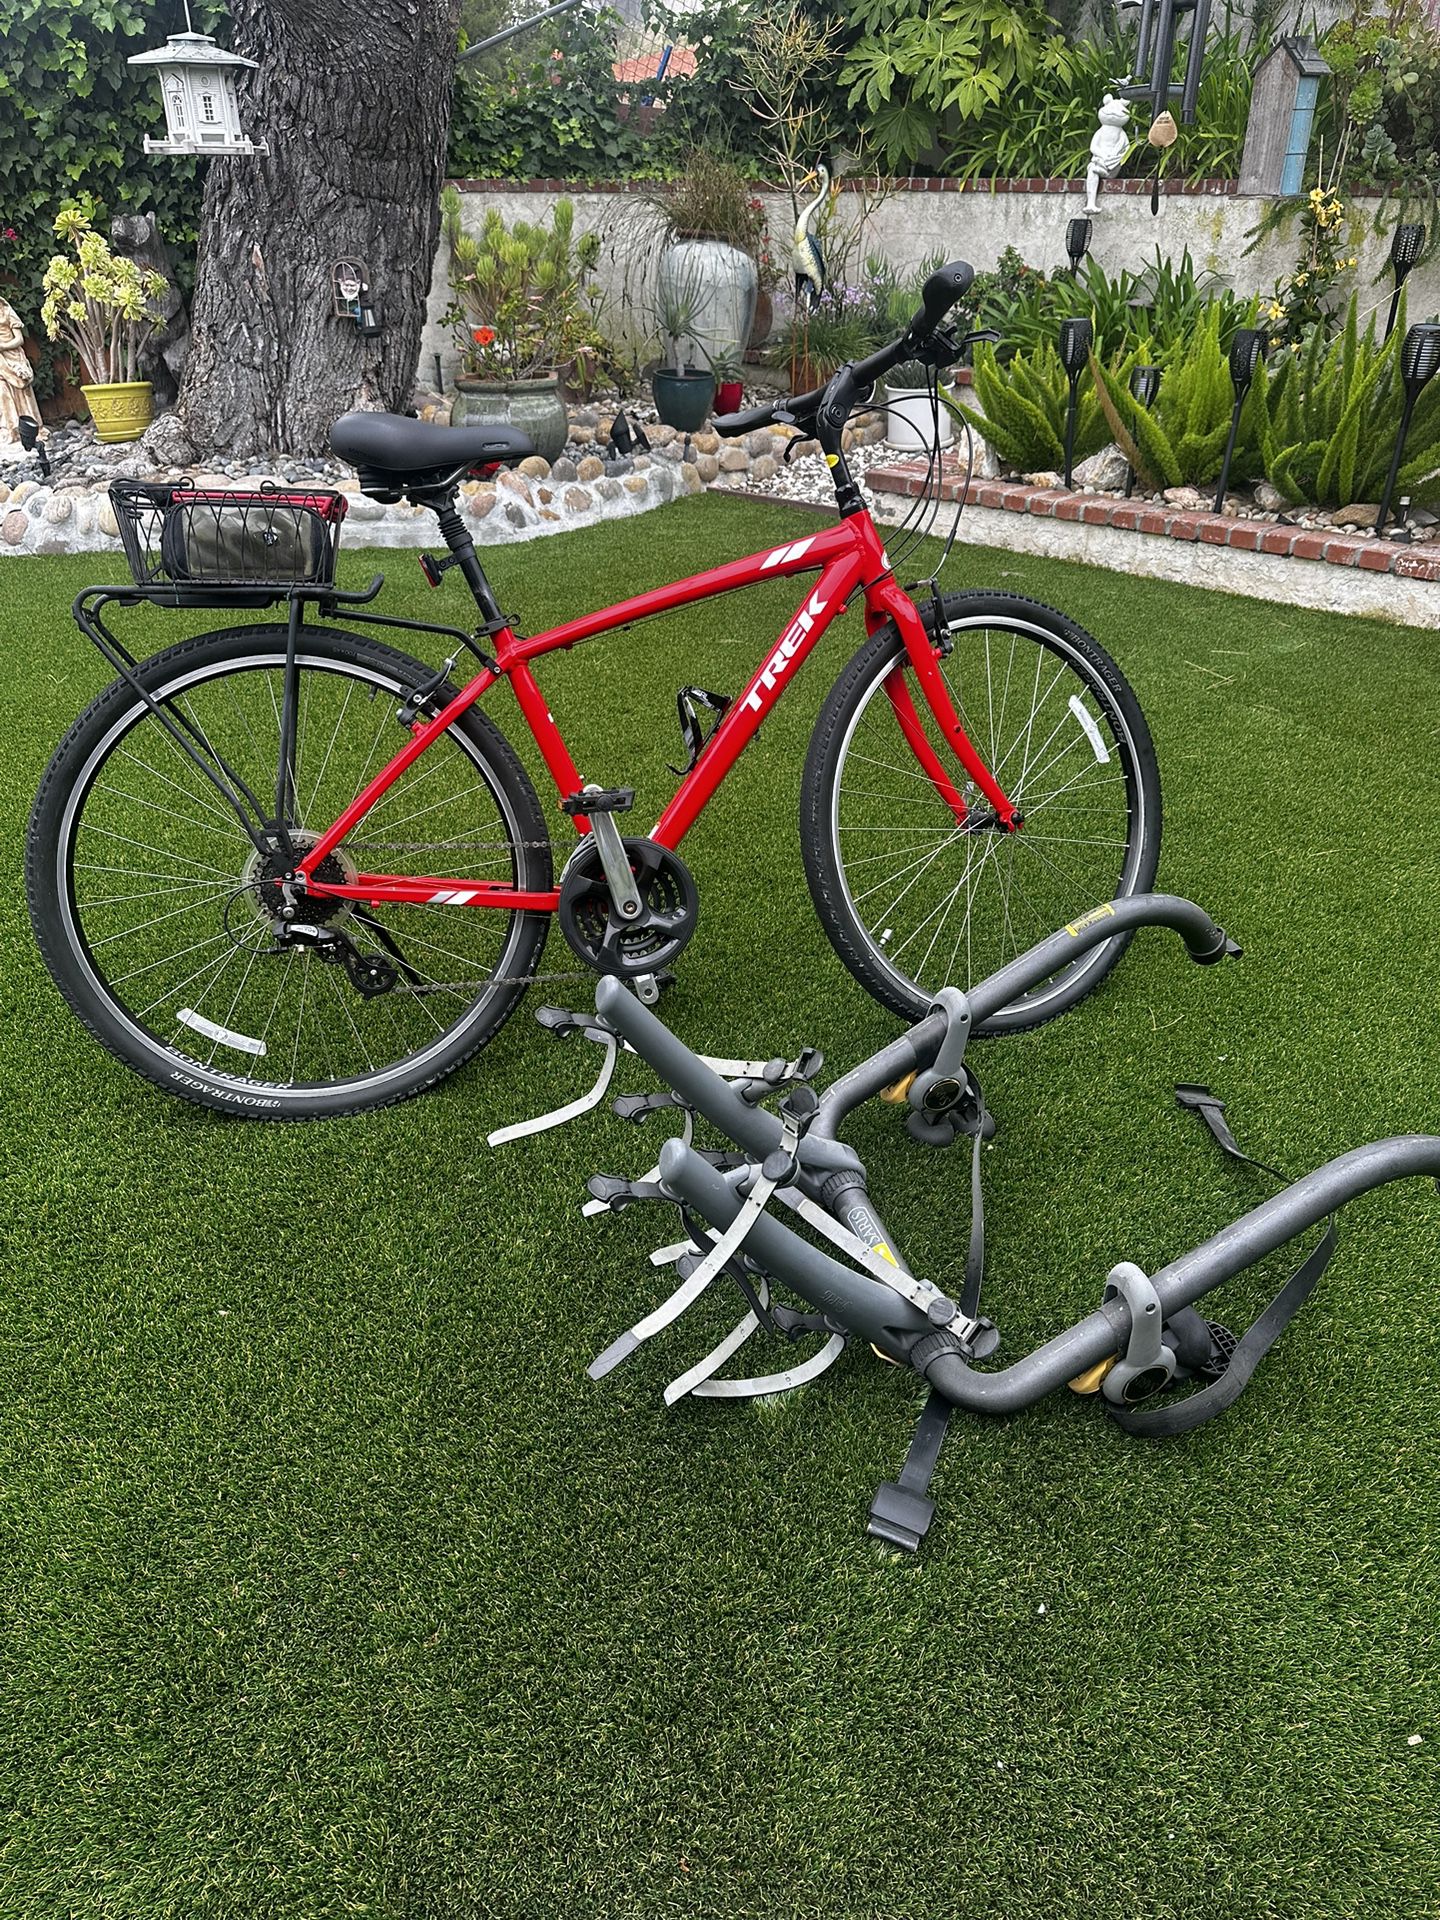 Trek Bike and Bike Rack